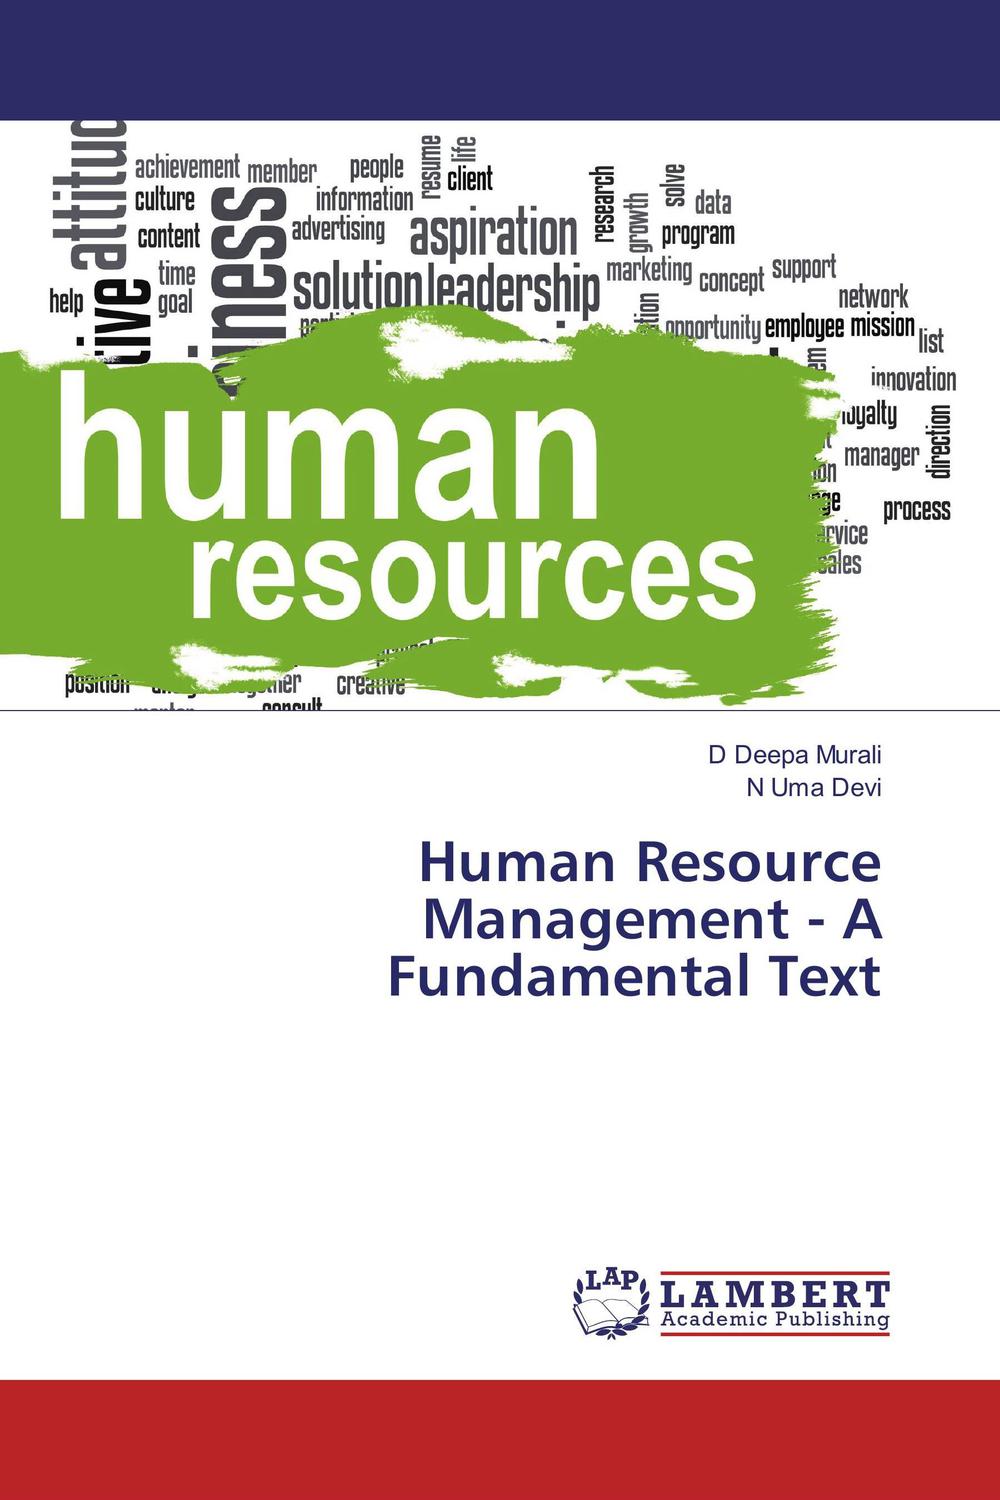 human resource management a fundamental text 1st edition deepa murali, d, uma devi, n 3659927678,